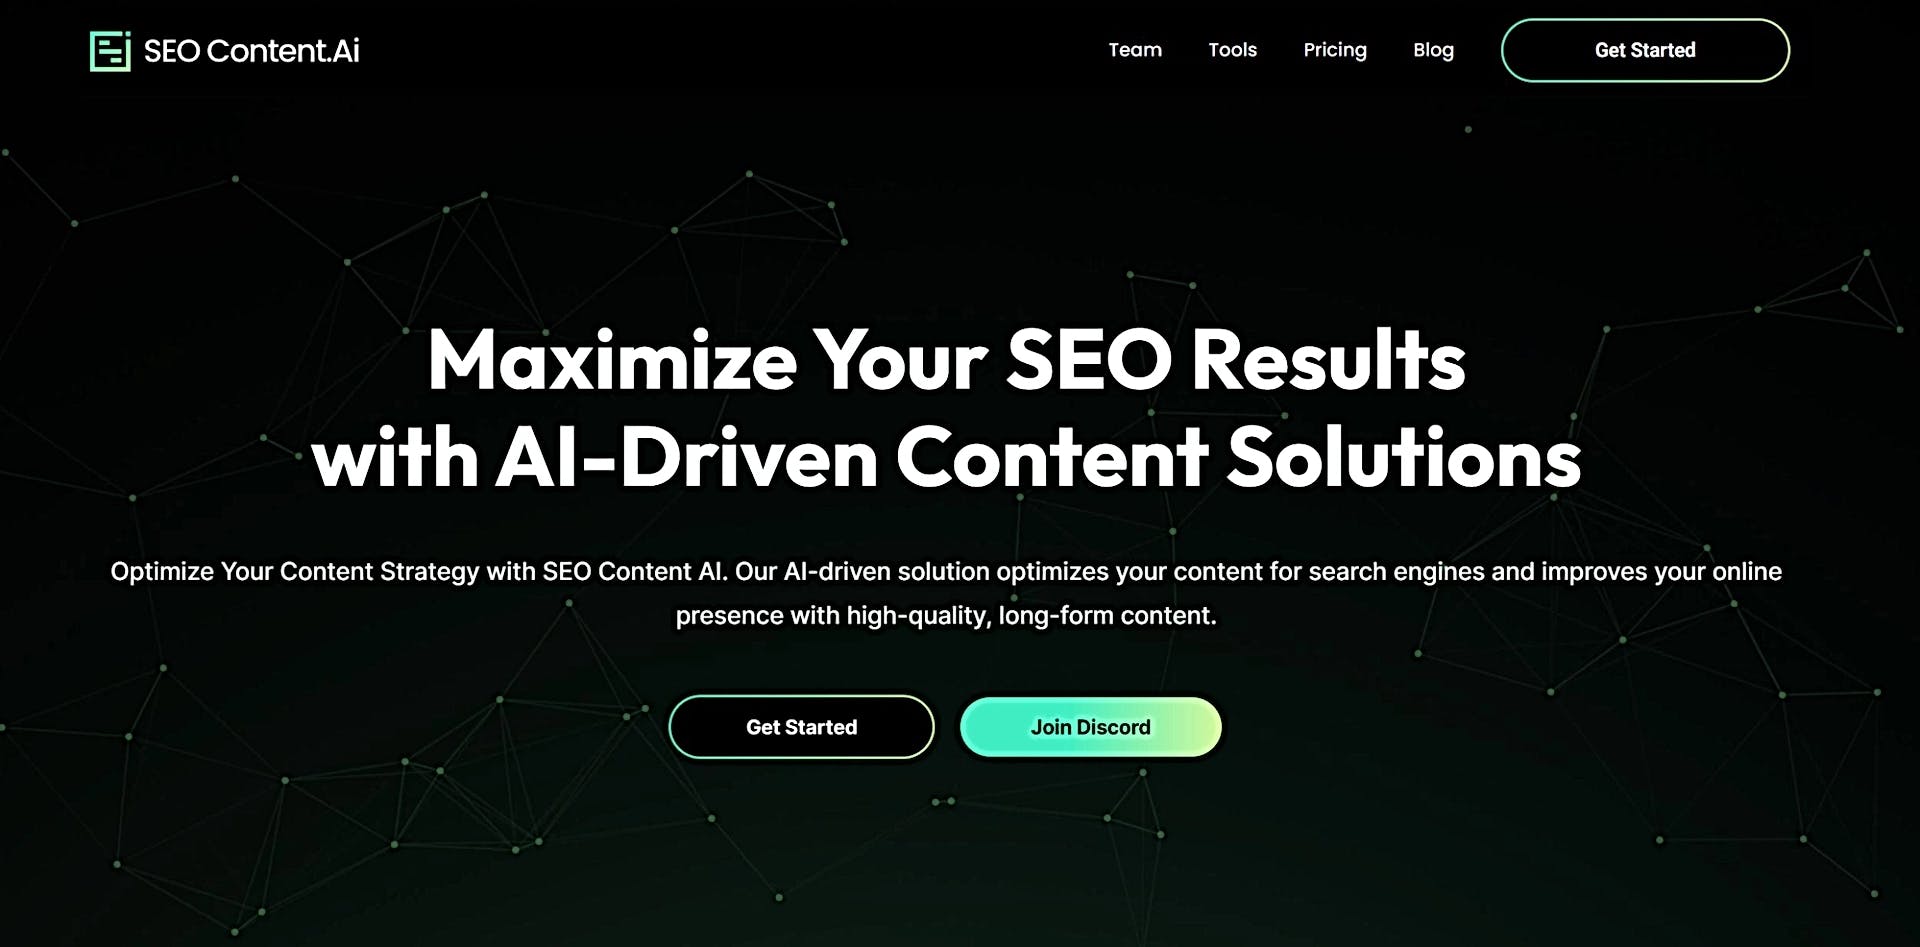 SEO Content AI featured